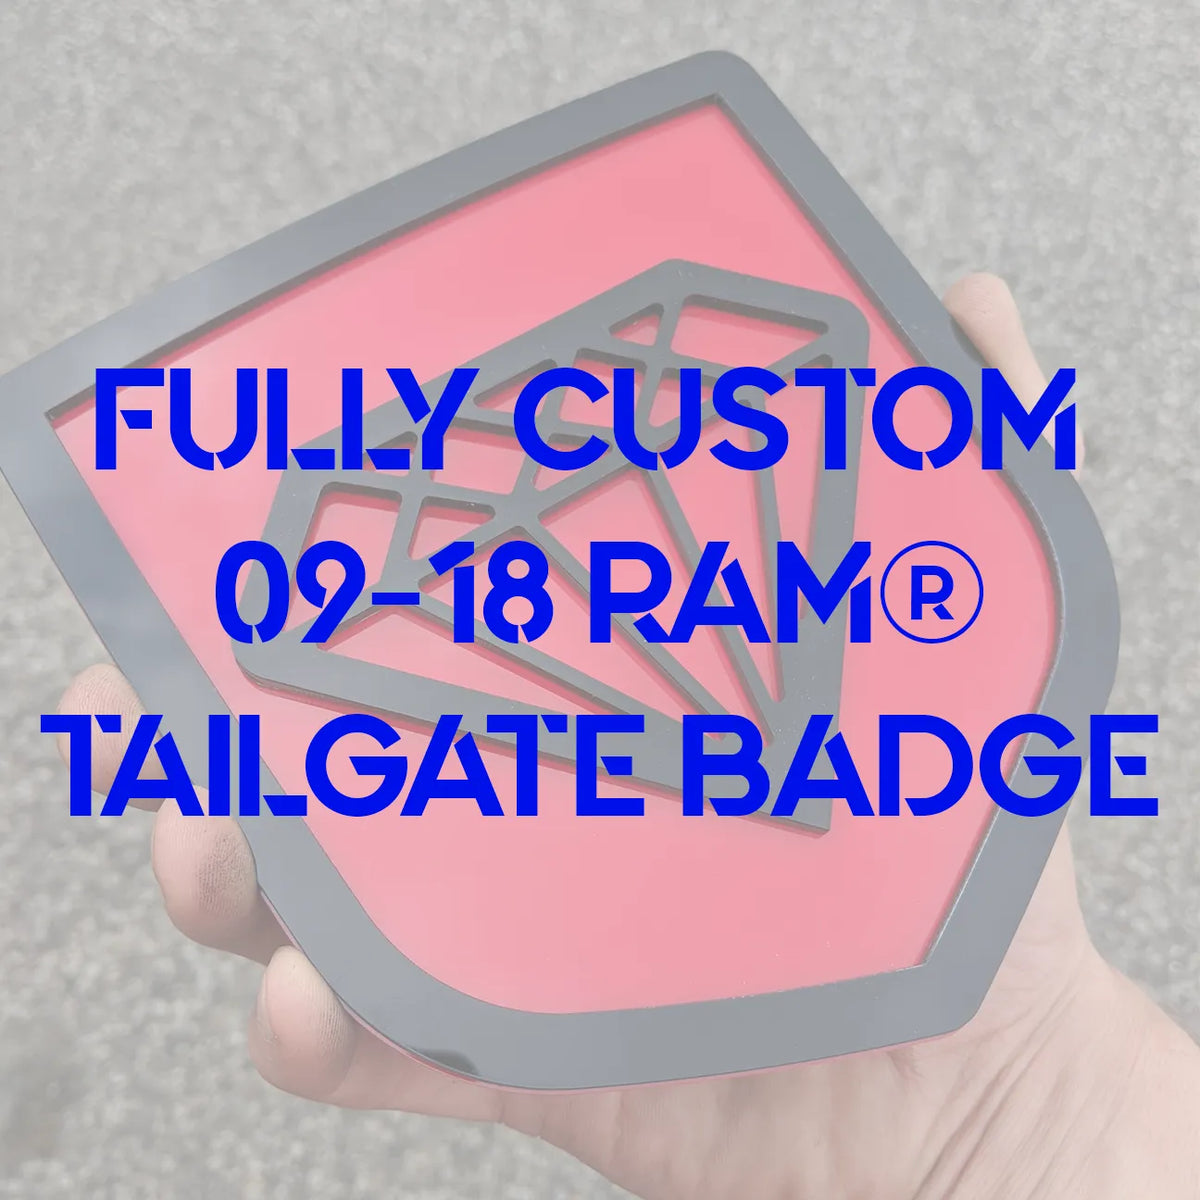 Upload your Own - Custom Badge - Fits 2009-2018 Dodge® Ram® Tailgate -1500, 2500, 3500